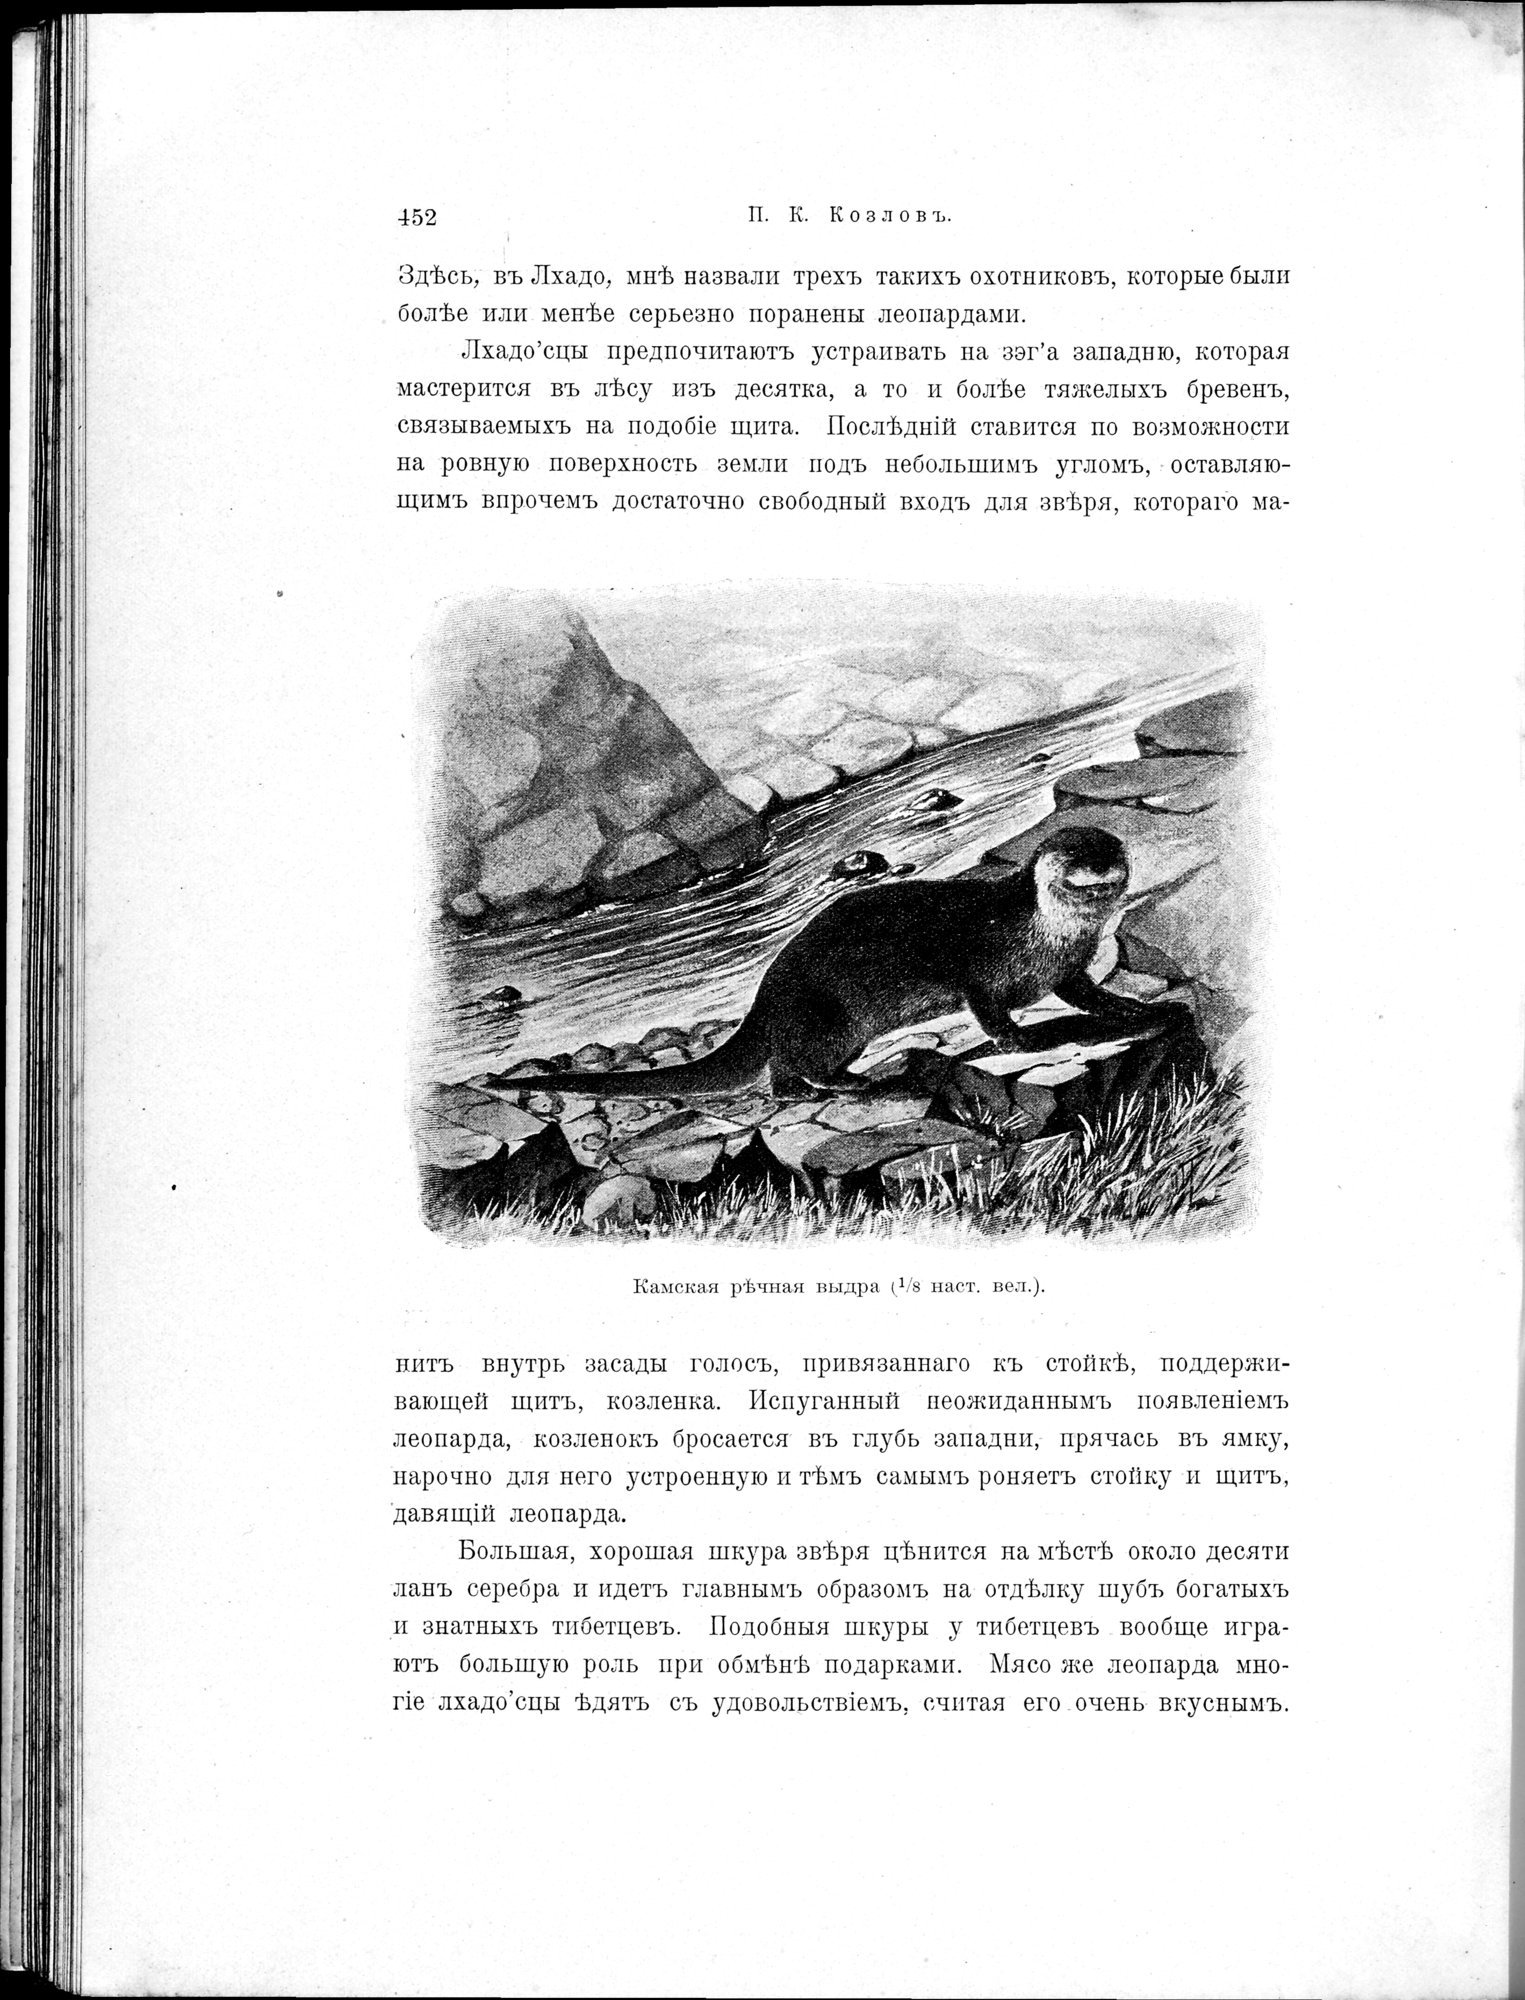 Mongoliia i Kam : vol.2 / Page 254 (Grayscale High Resolution Image)